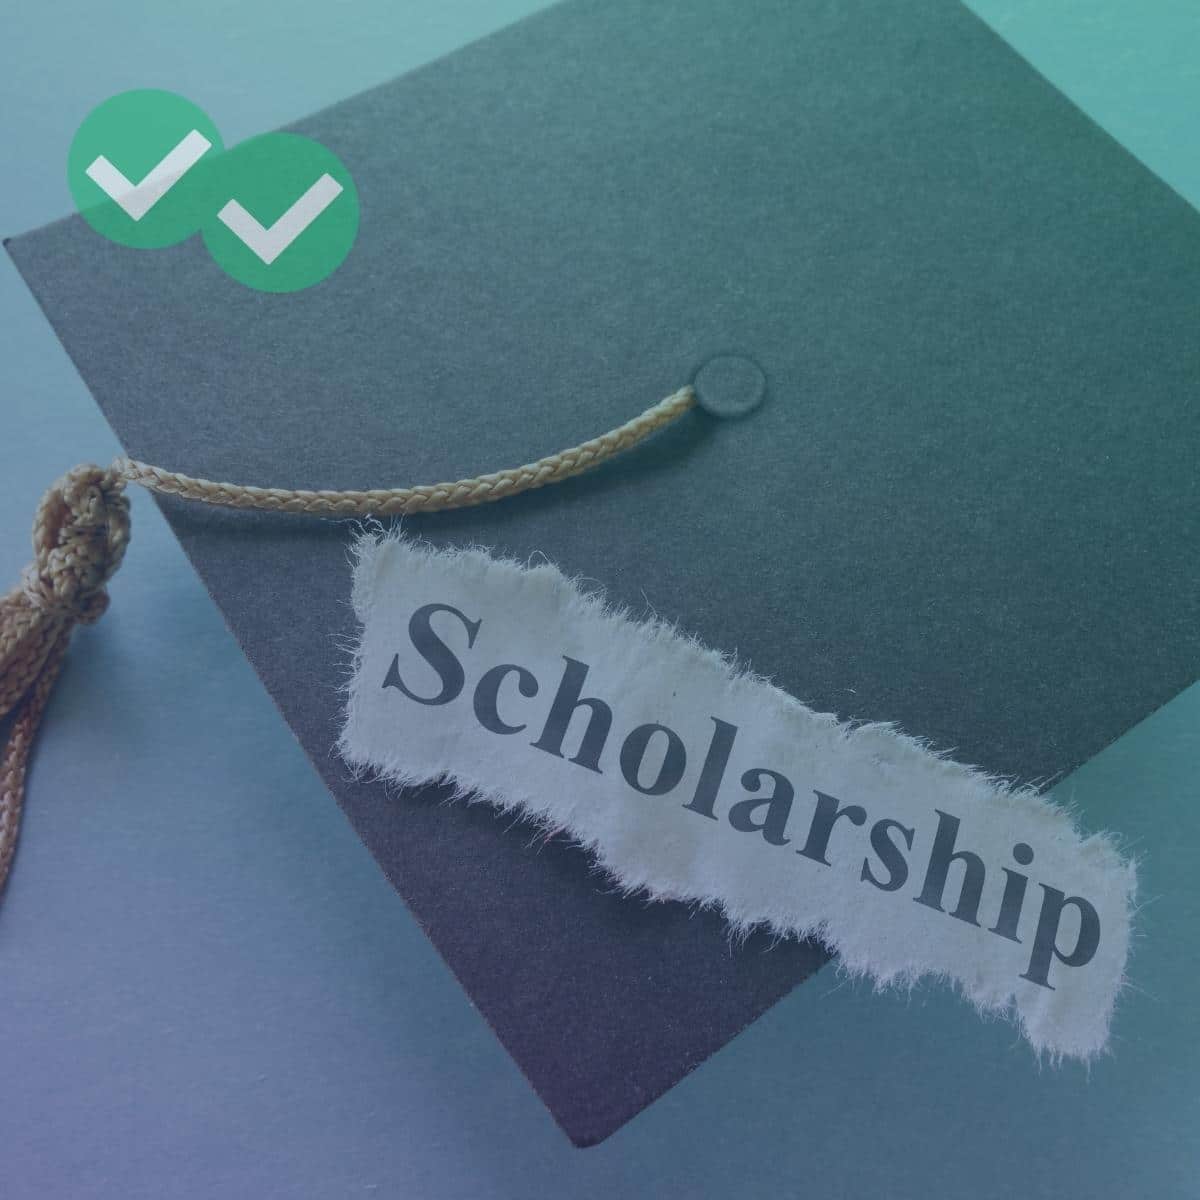 How to Find TOEFL Scholarships in 2022